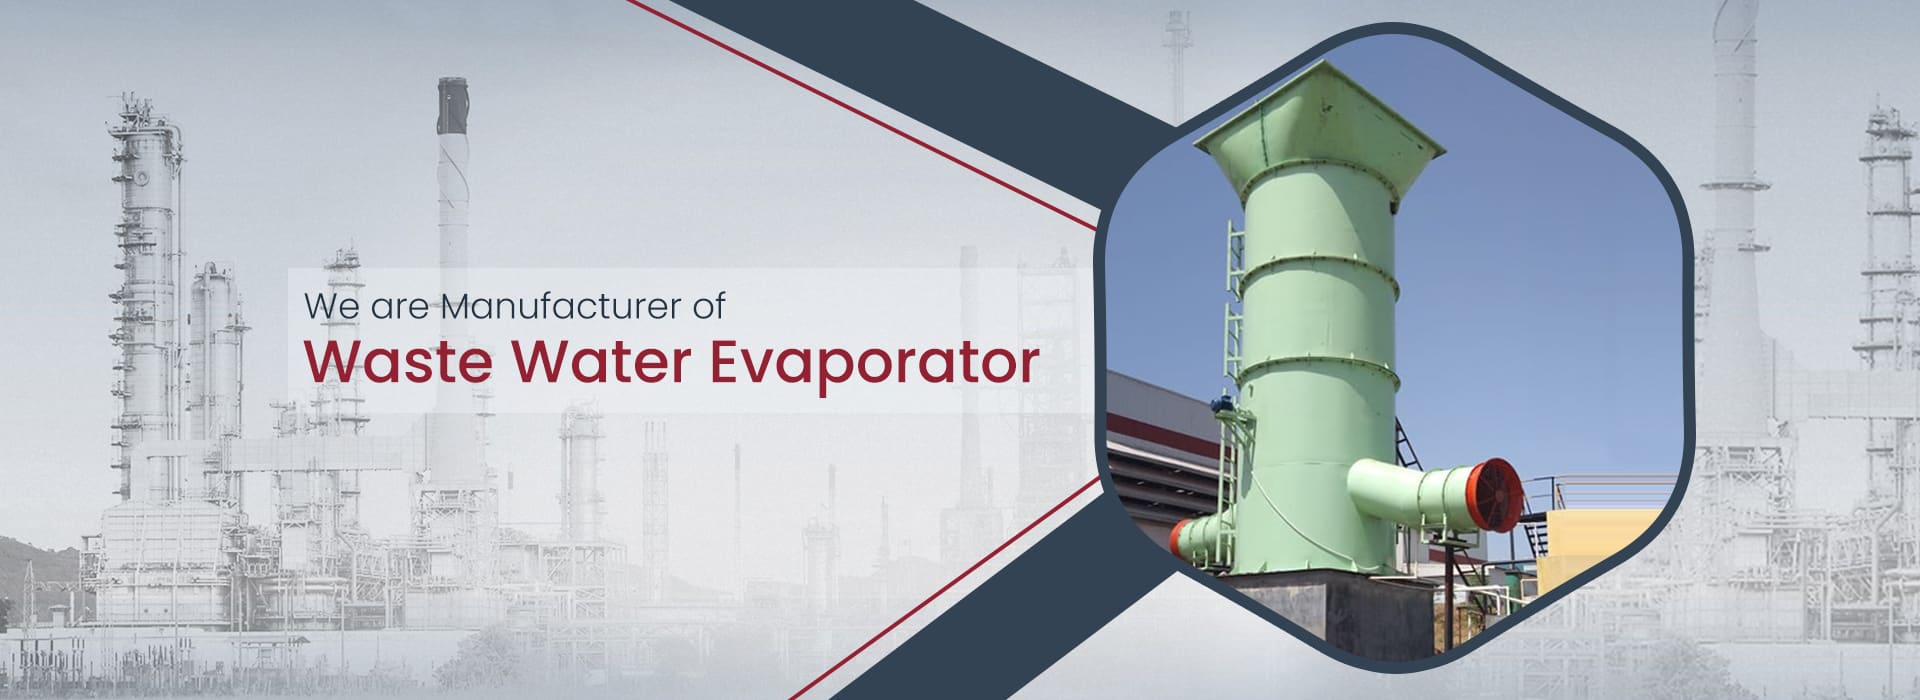 Waste water evaporator manufacturer in Gujarat, India